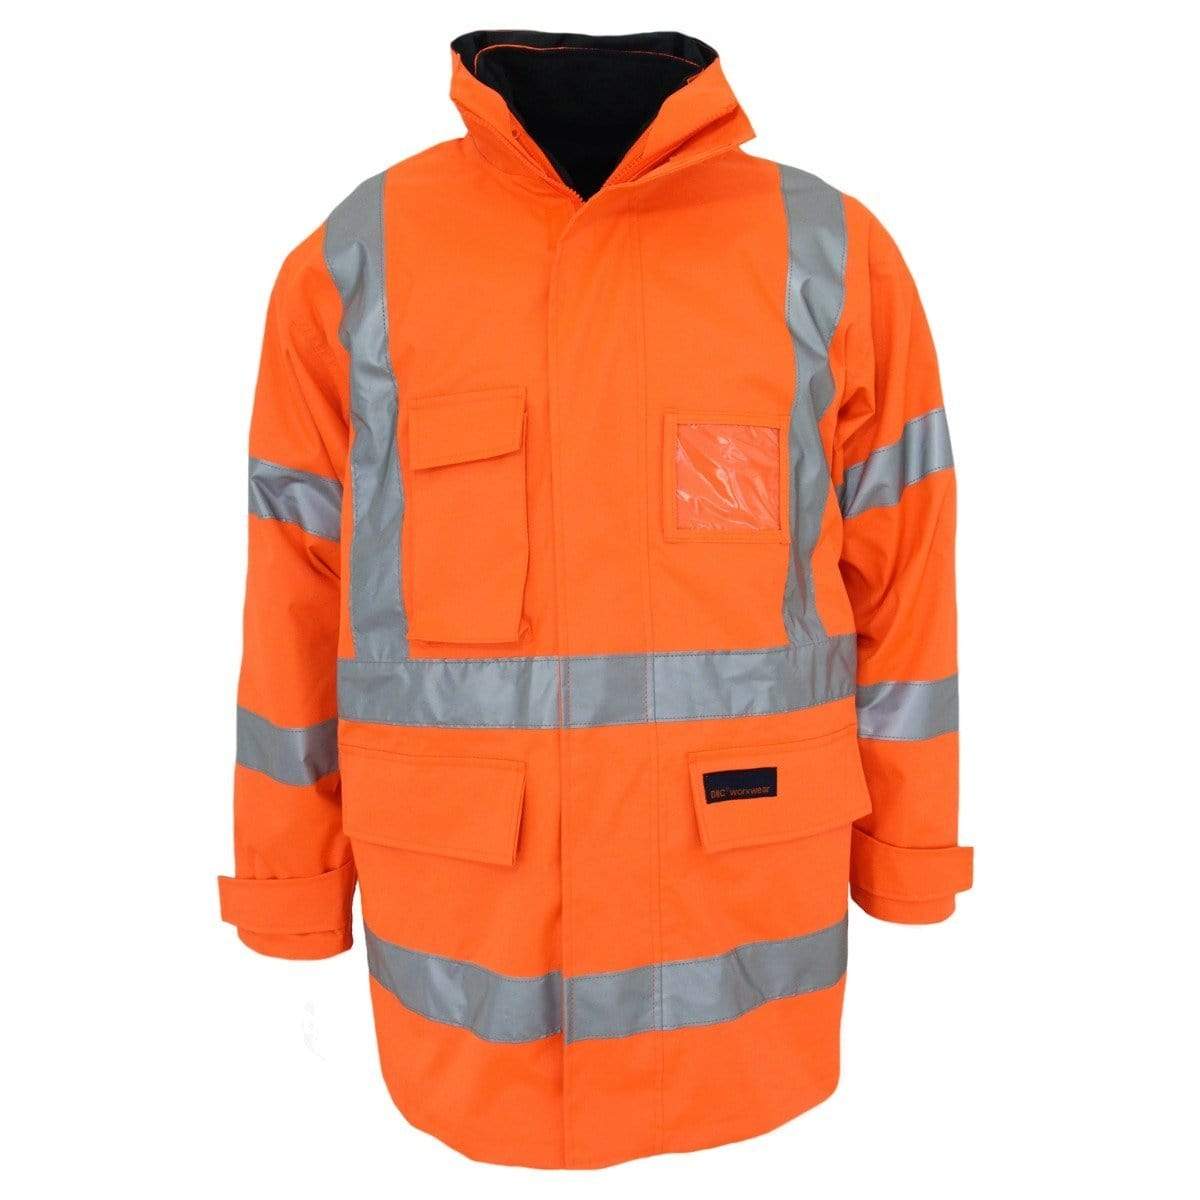 Dnc Workwear Hi-vis "X" Back 6-in-1 Rain Jacket Bio-motion Tape - 3797 Work Wear DNC Workwear Orange L 